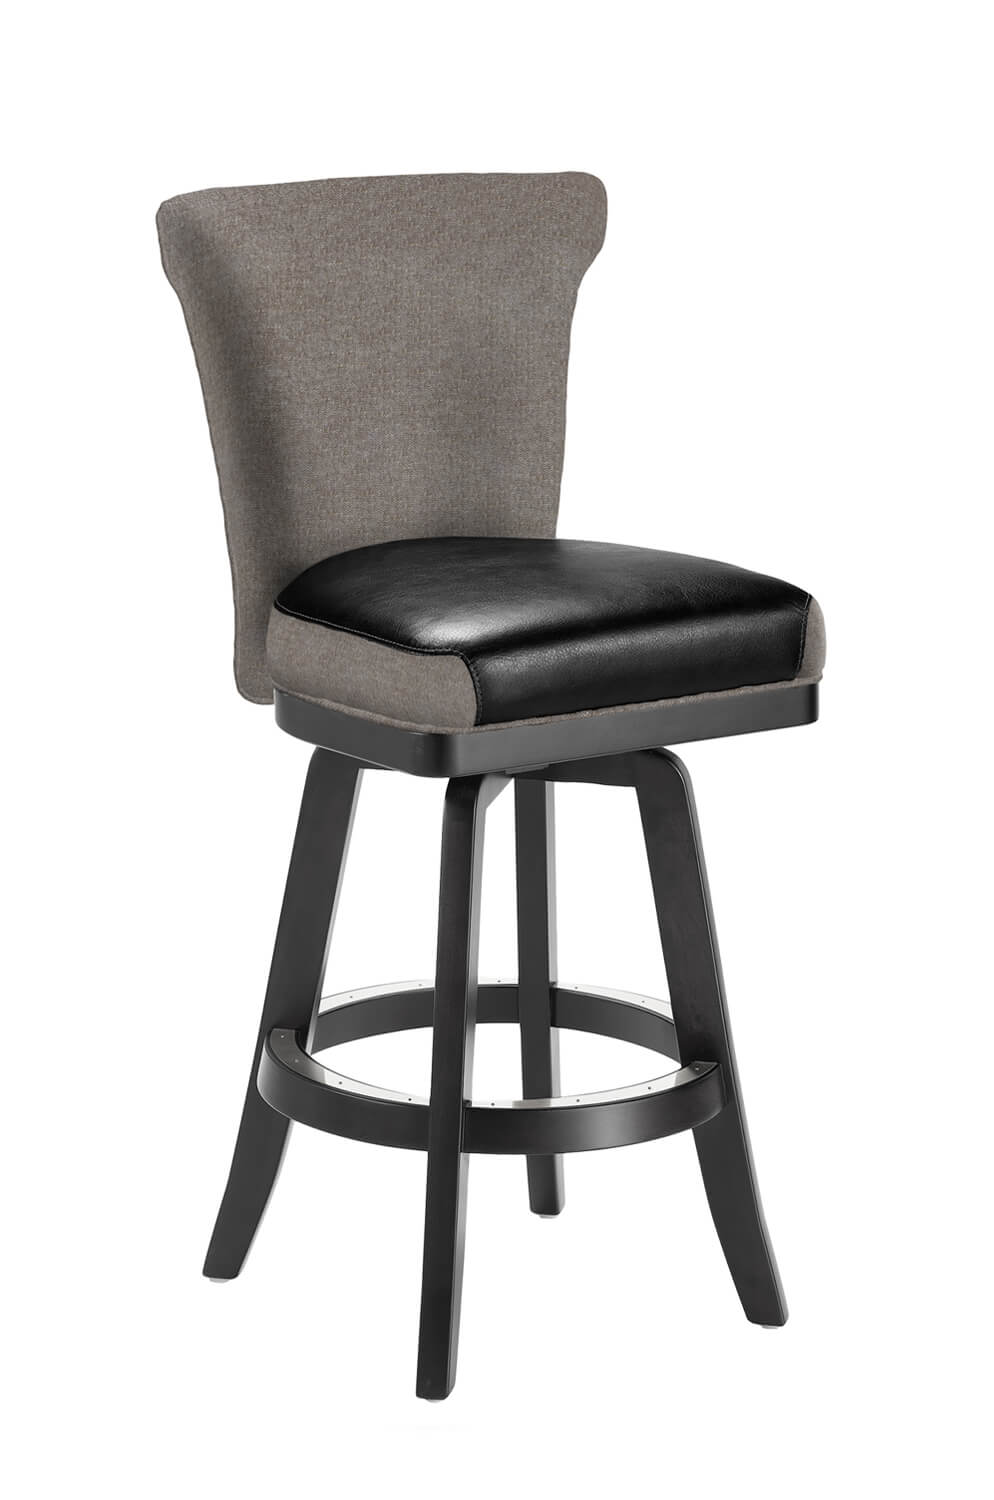 https://barstoolcomforts.com/wp-content/uploads/2020/07/darafeev-dara-wood-upholstered-swivel-bar-stool-leather-seat-fabric-back.jpg